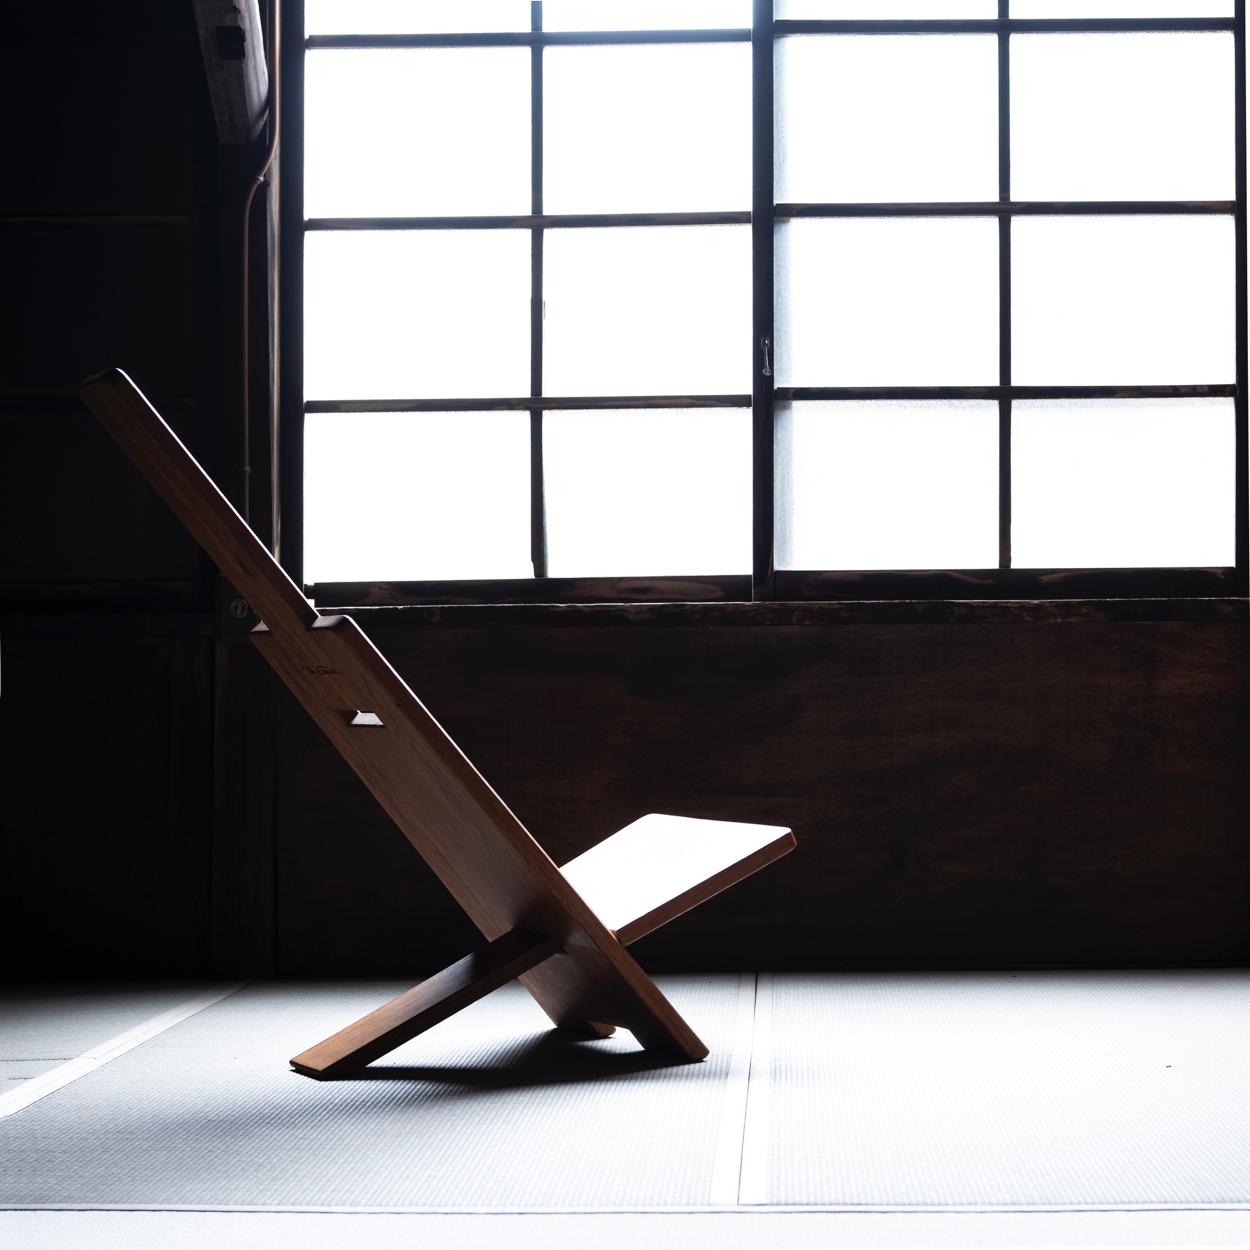 Alain Gaubert
ミニマル
彫刻
椅子